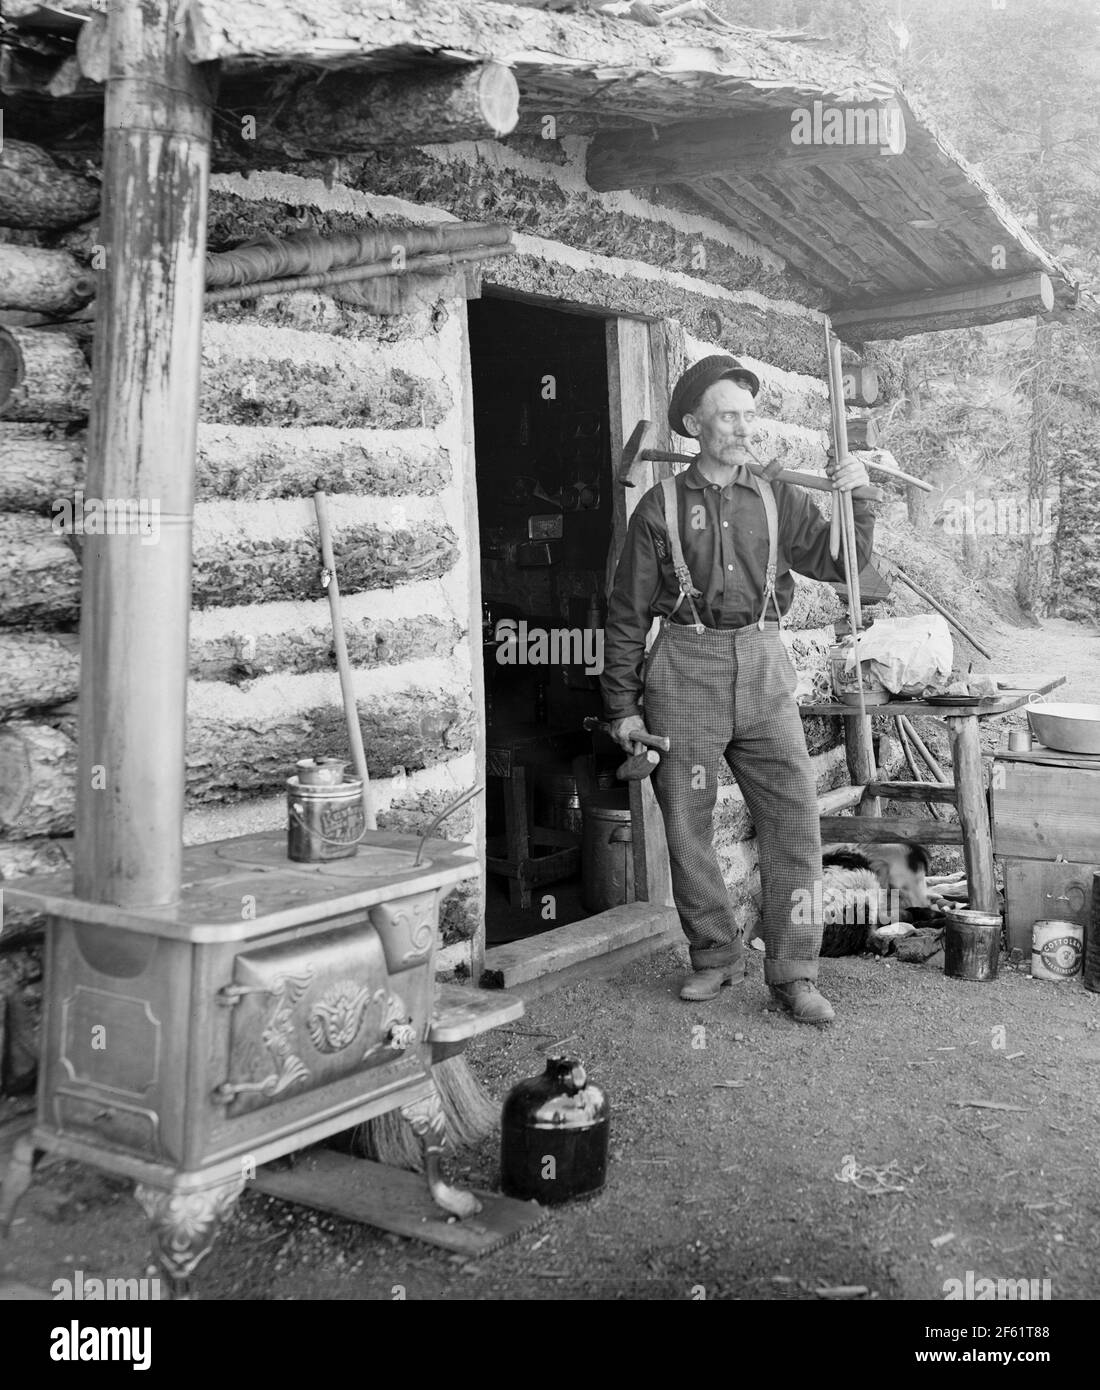 Pike's Peak Prospector and Log Cabin, 1900 Stock Photo